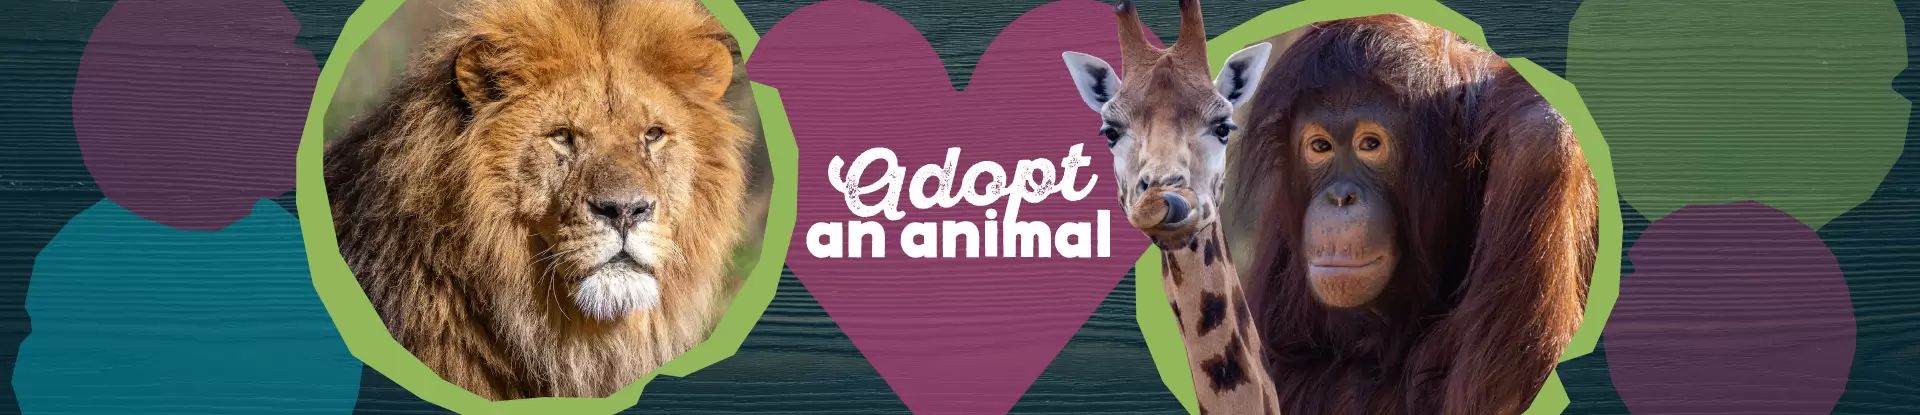 paignton zoo adoption web banners